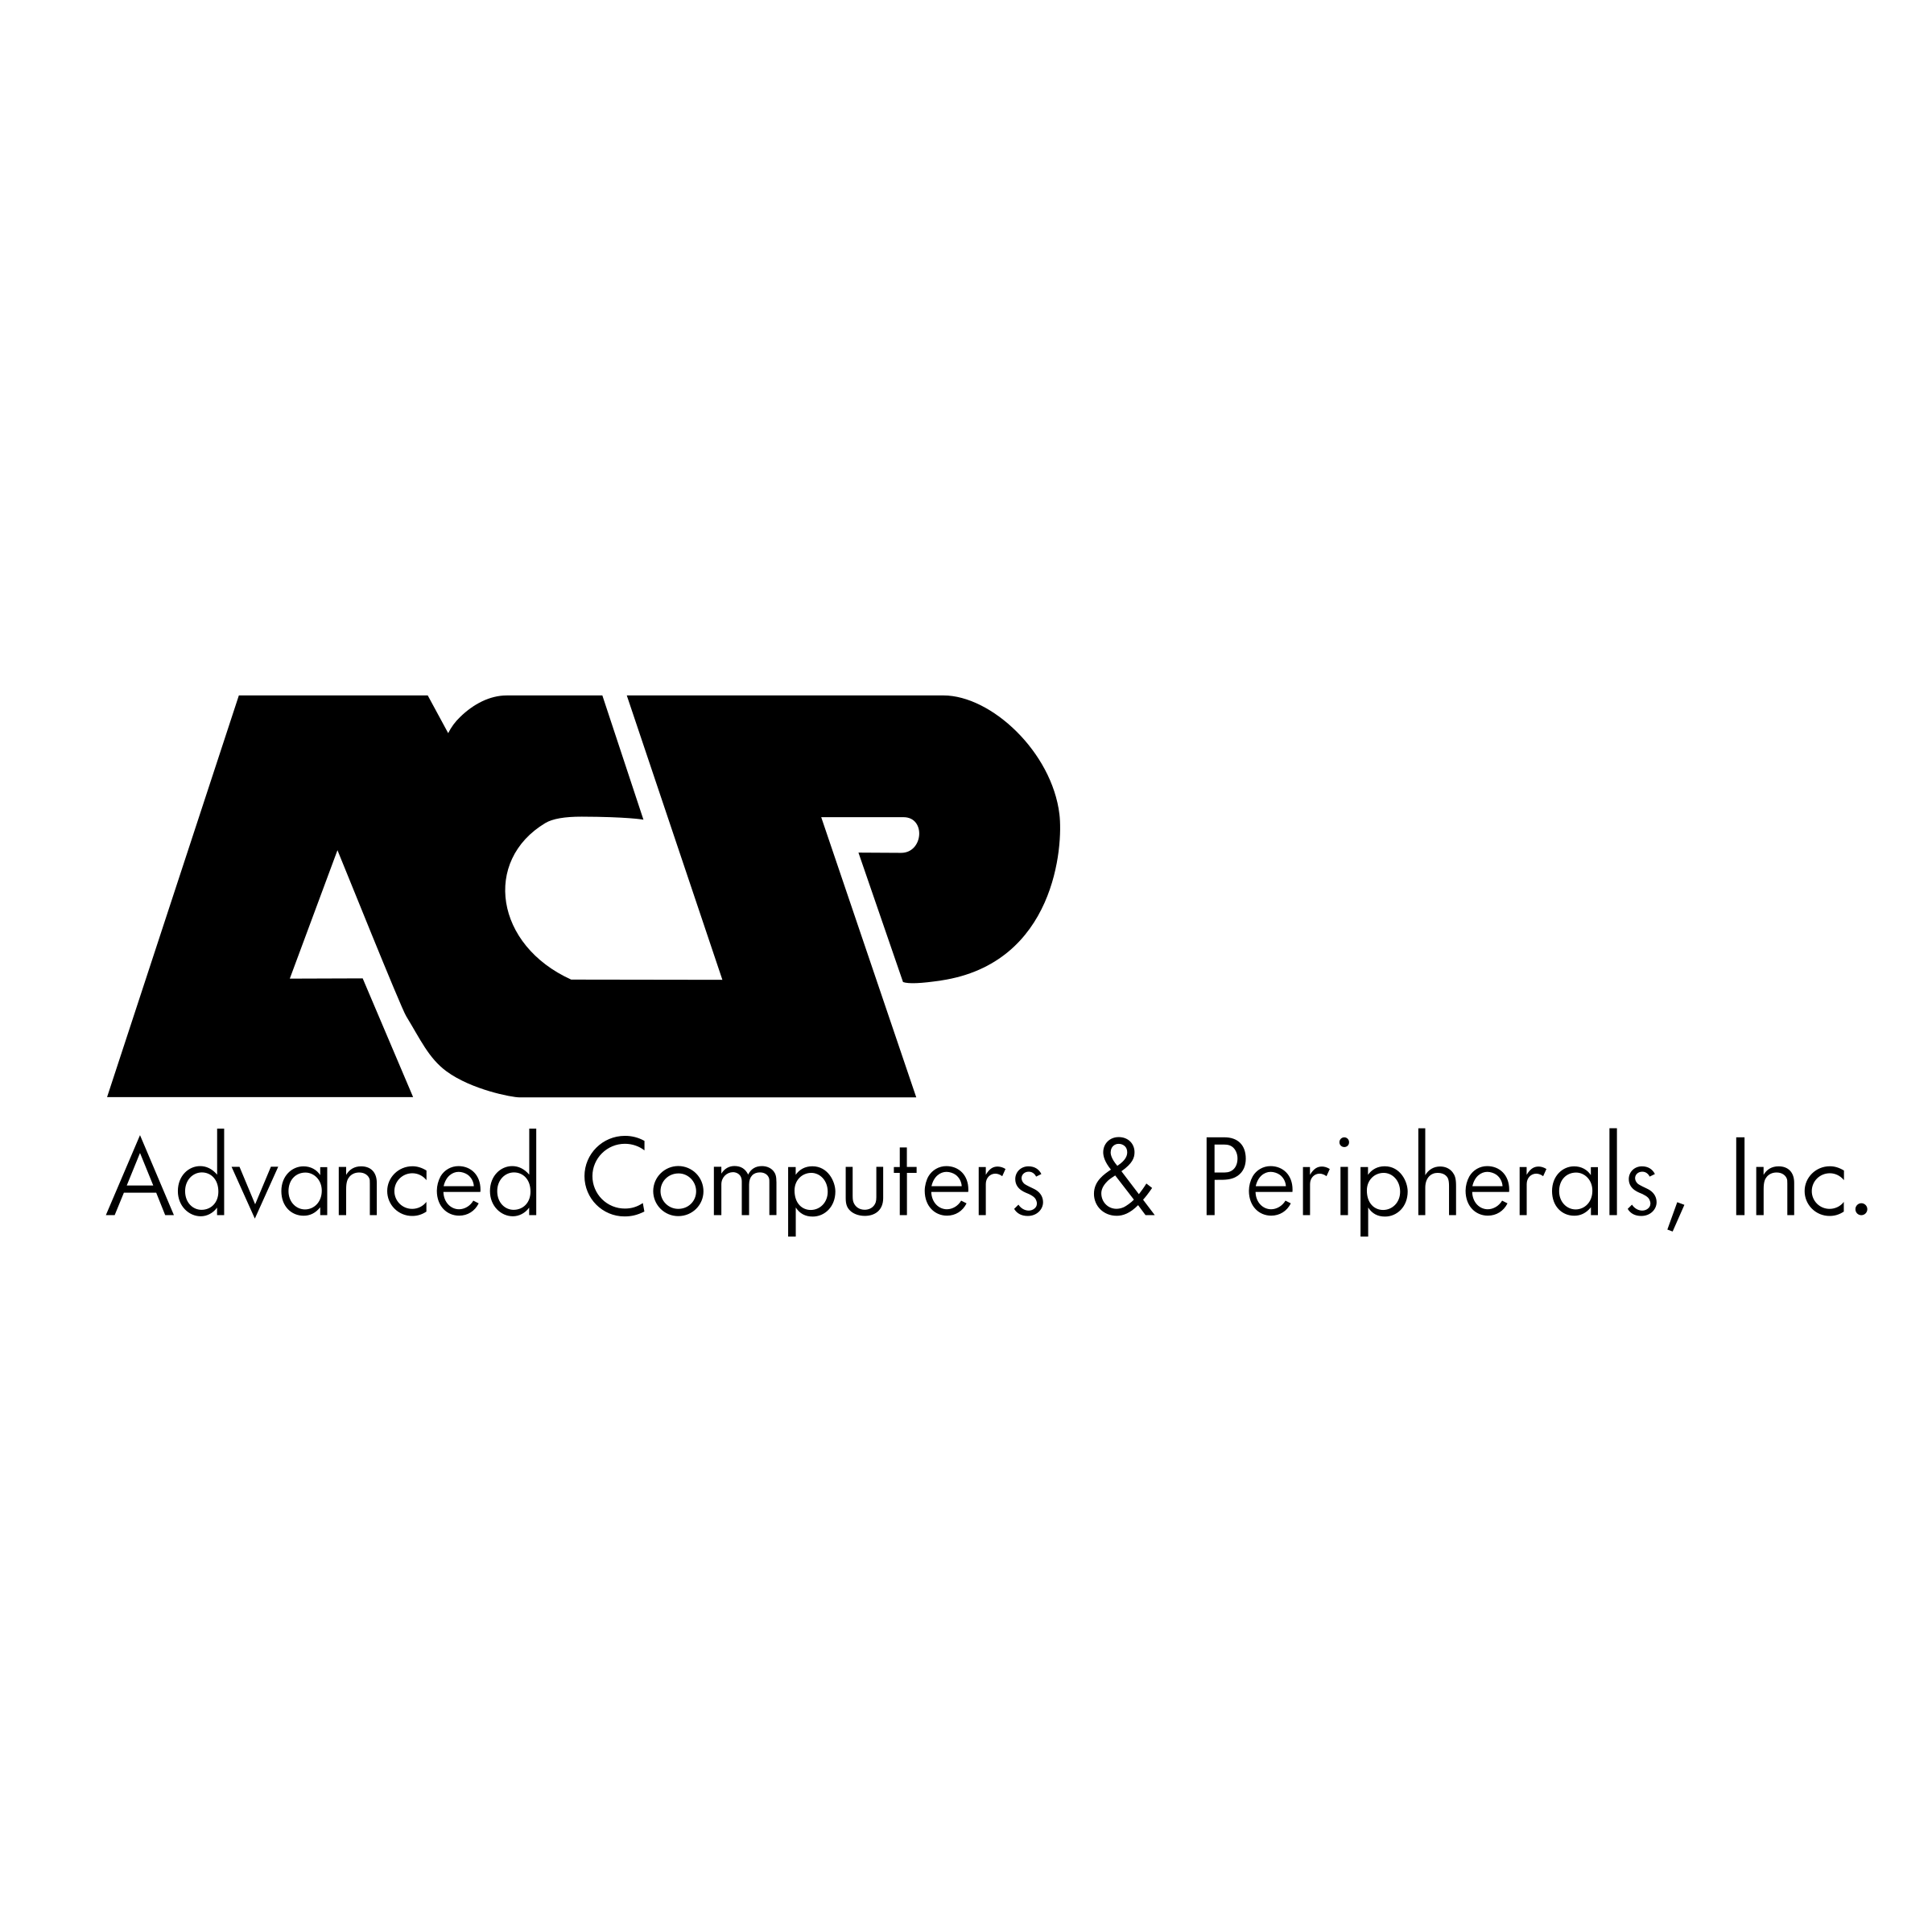 ACP Logo - ACP 01 Logo PNG Transparent & SVG Vector - Freebie Supply